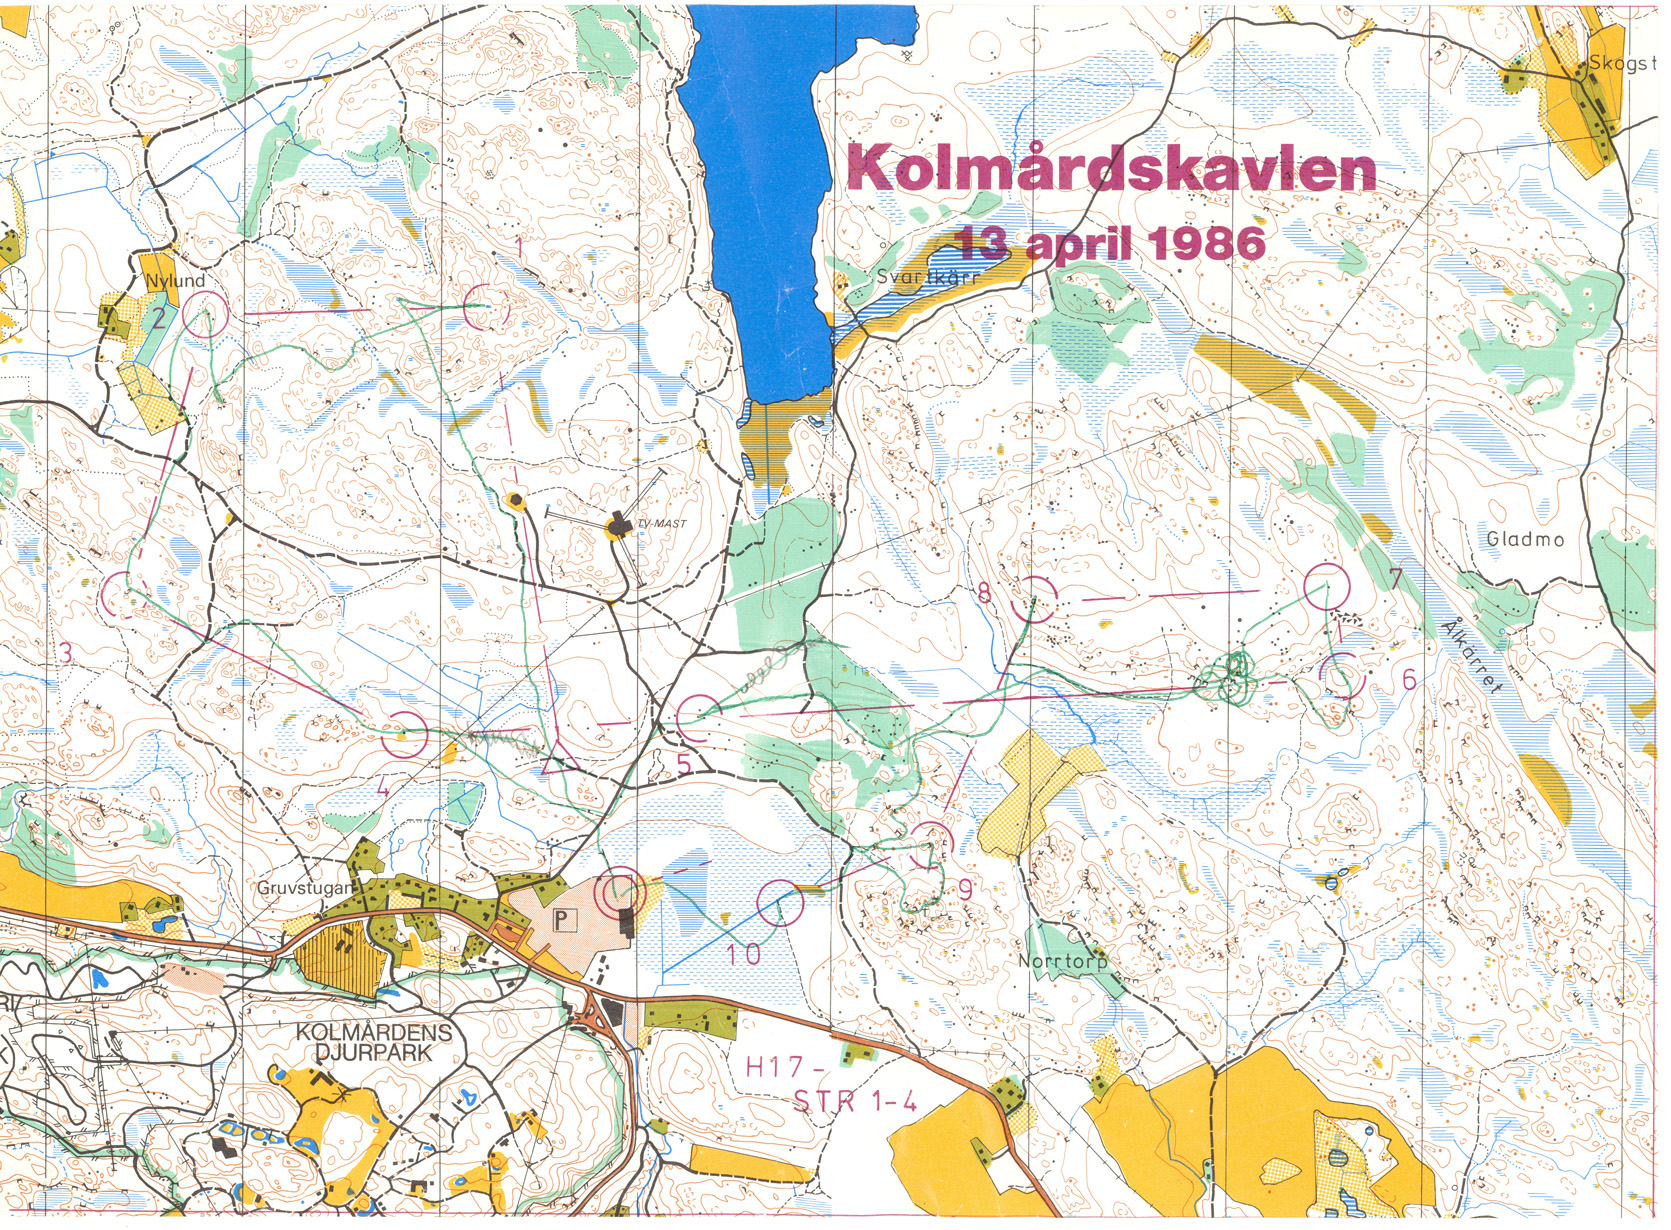 Kolmårdskavlen (1986-04-13)